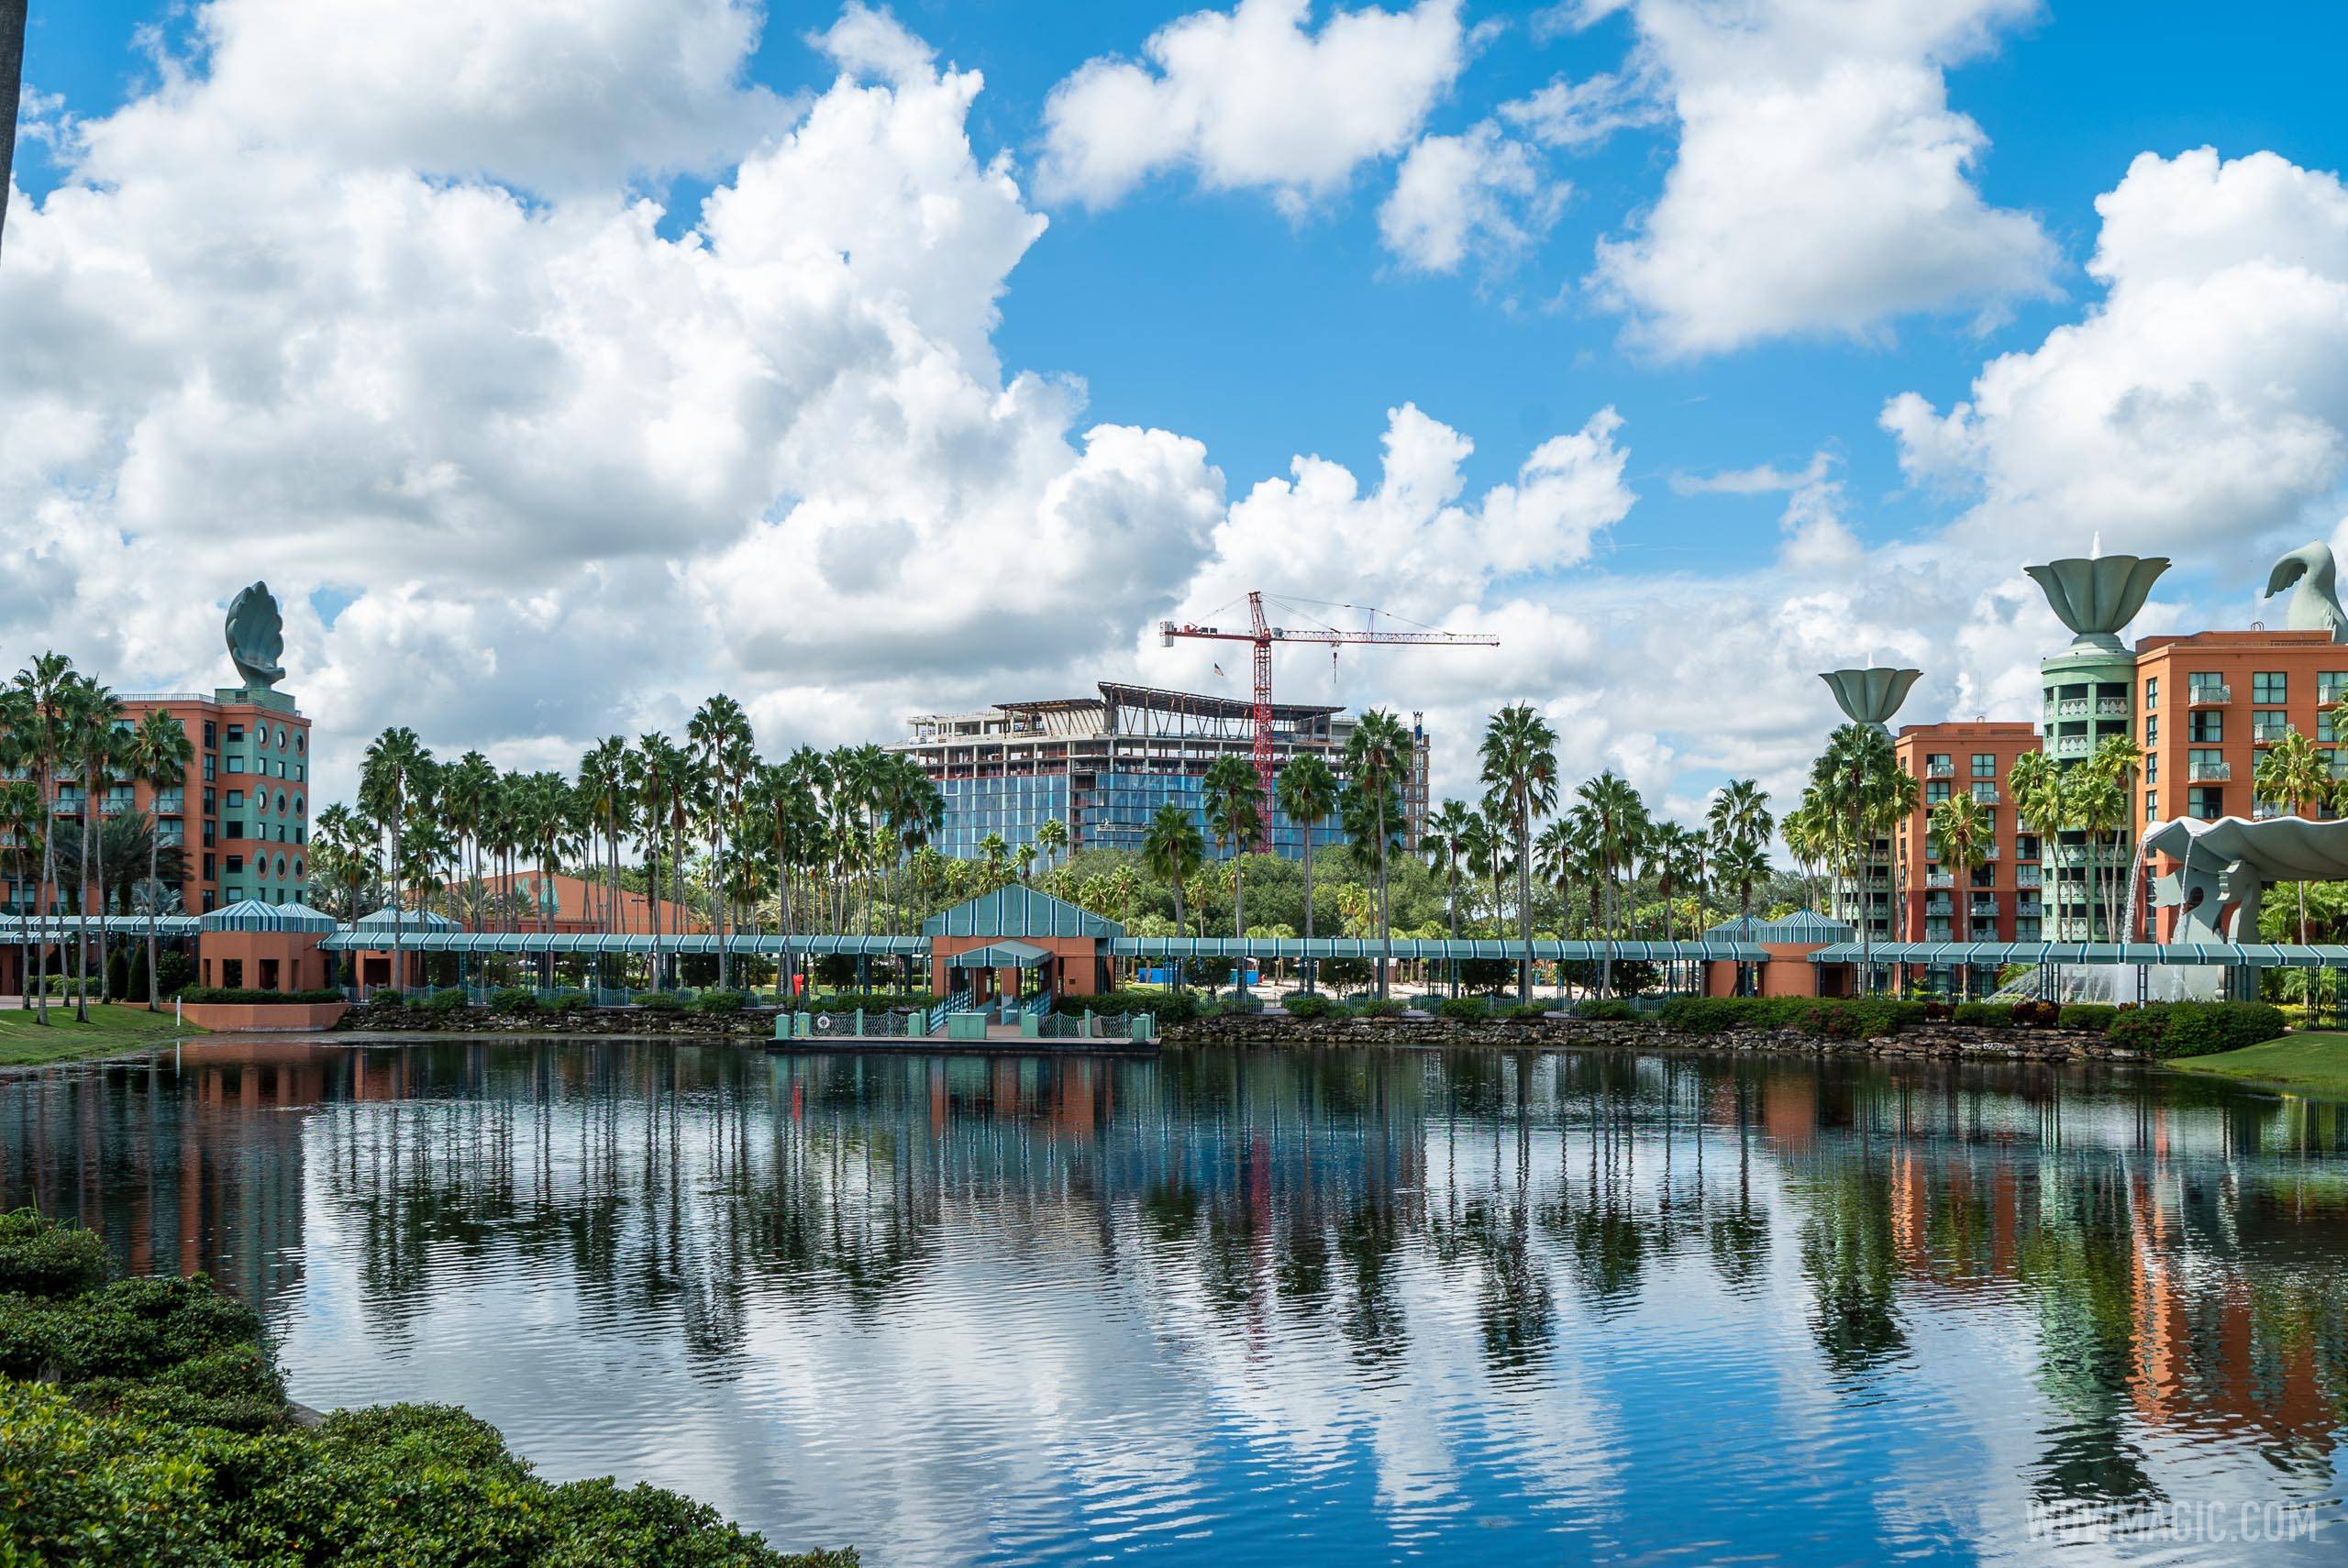 The Walt Disney World Swan Reserve construction - September 8 2020